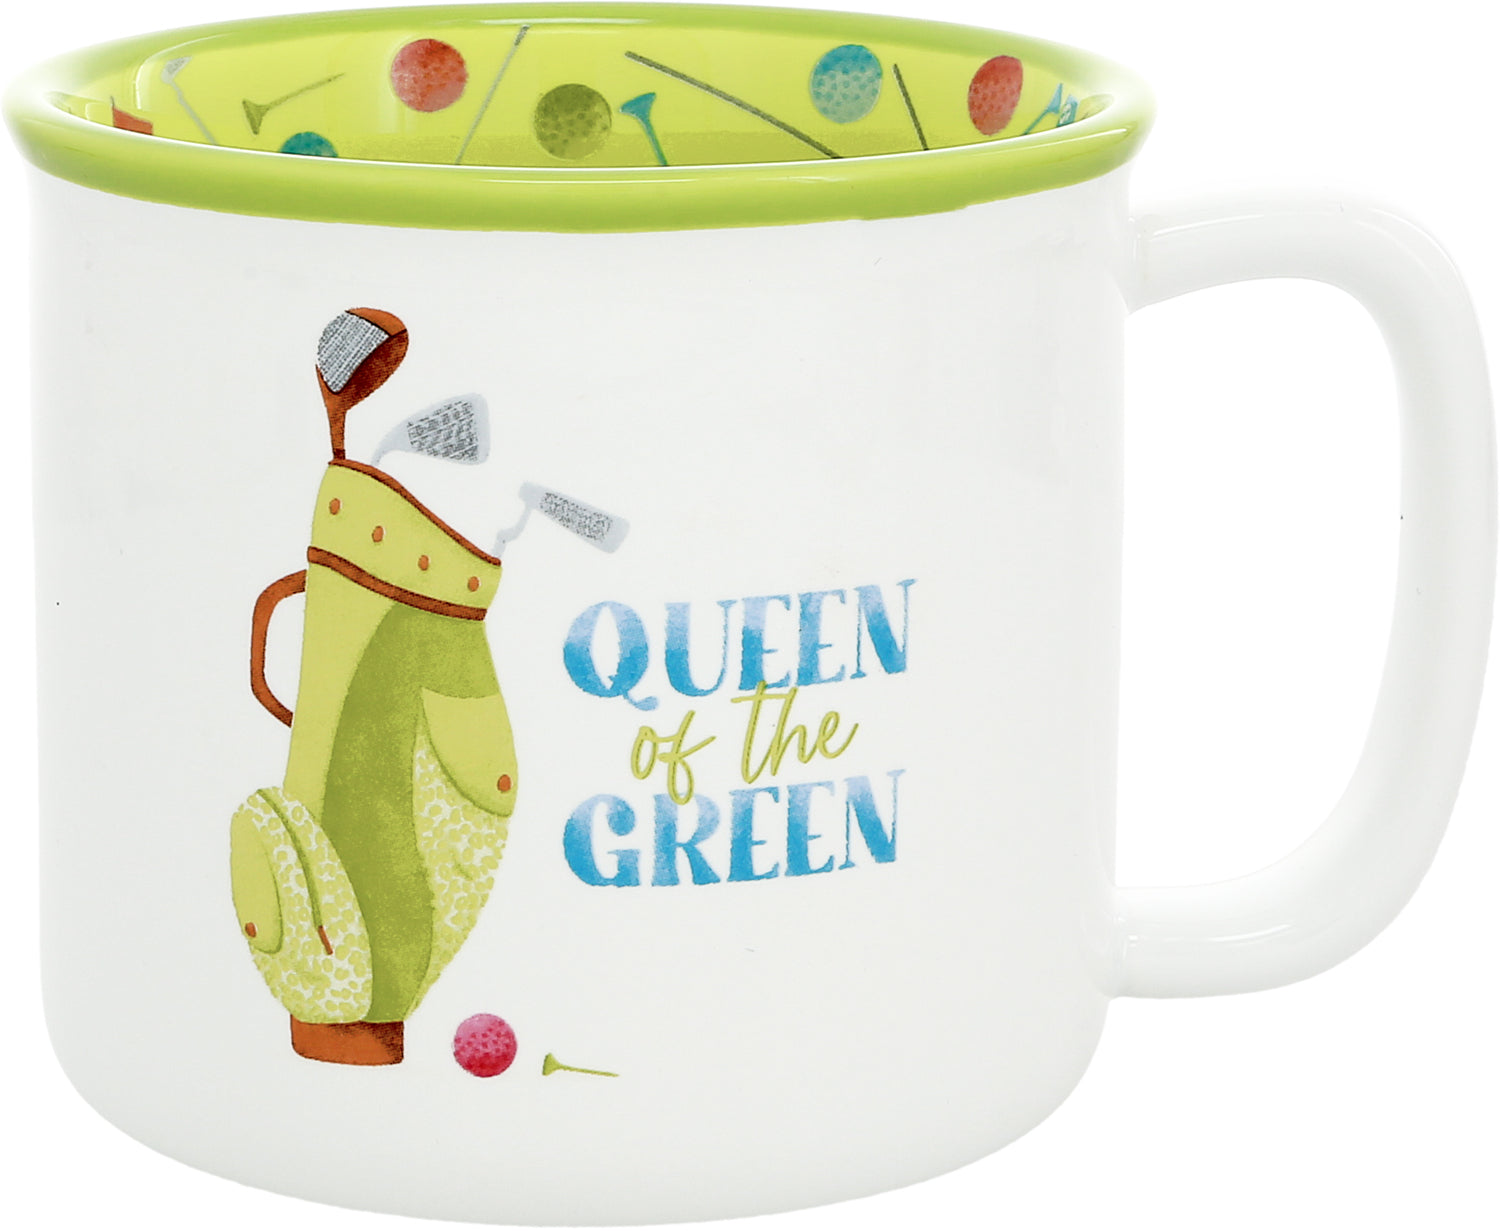 Queen of the Green Mug